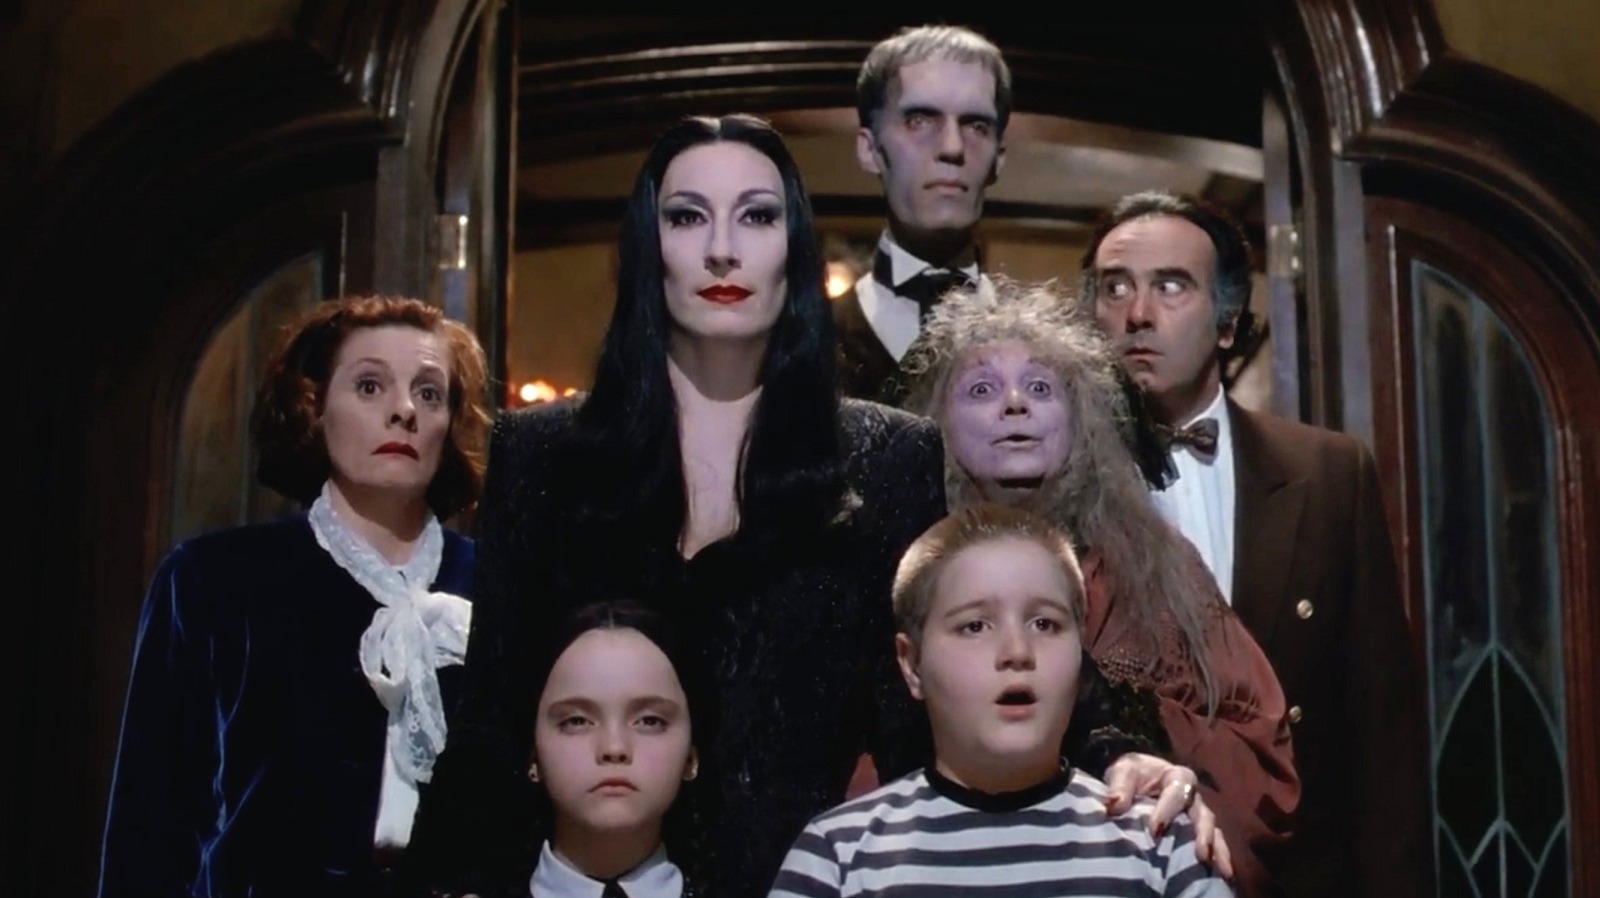 The Addams Family - Wikipedia